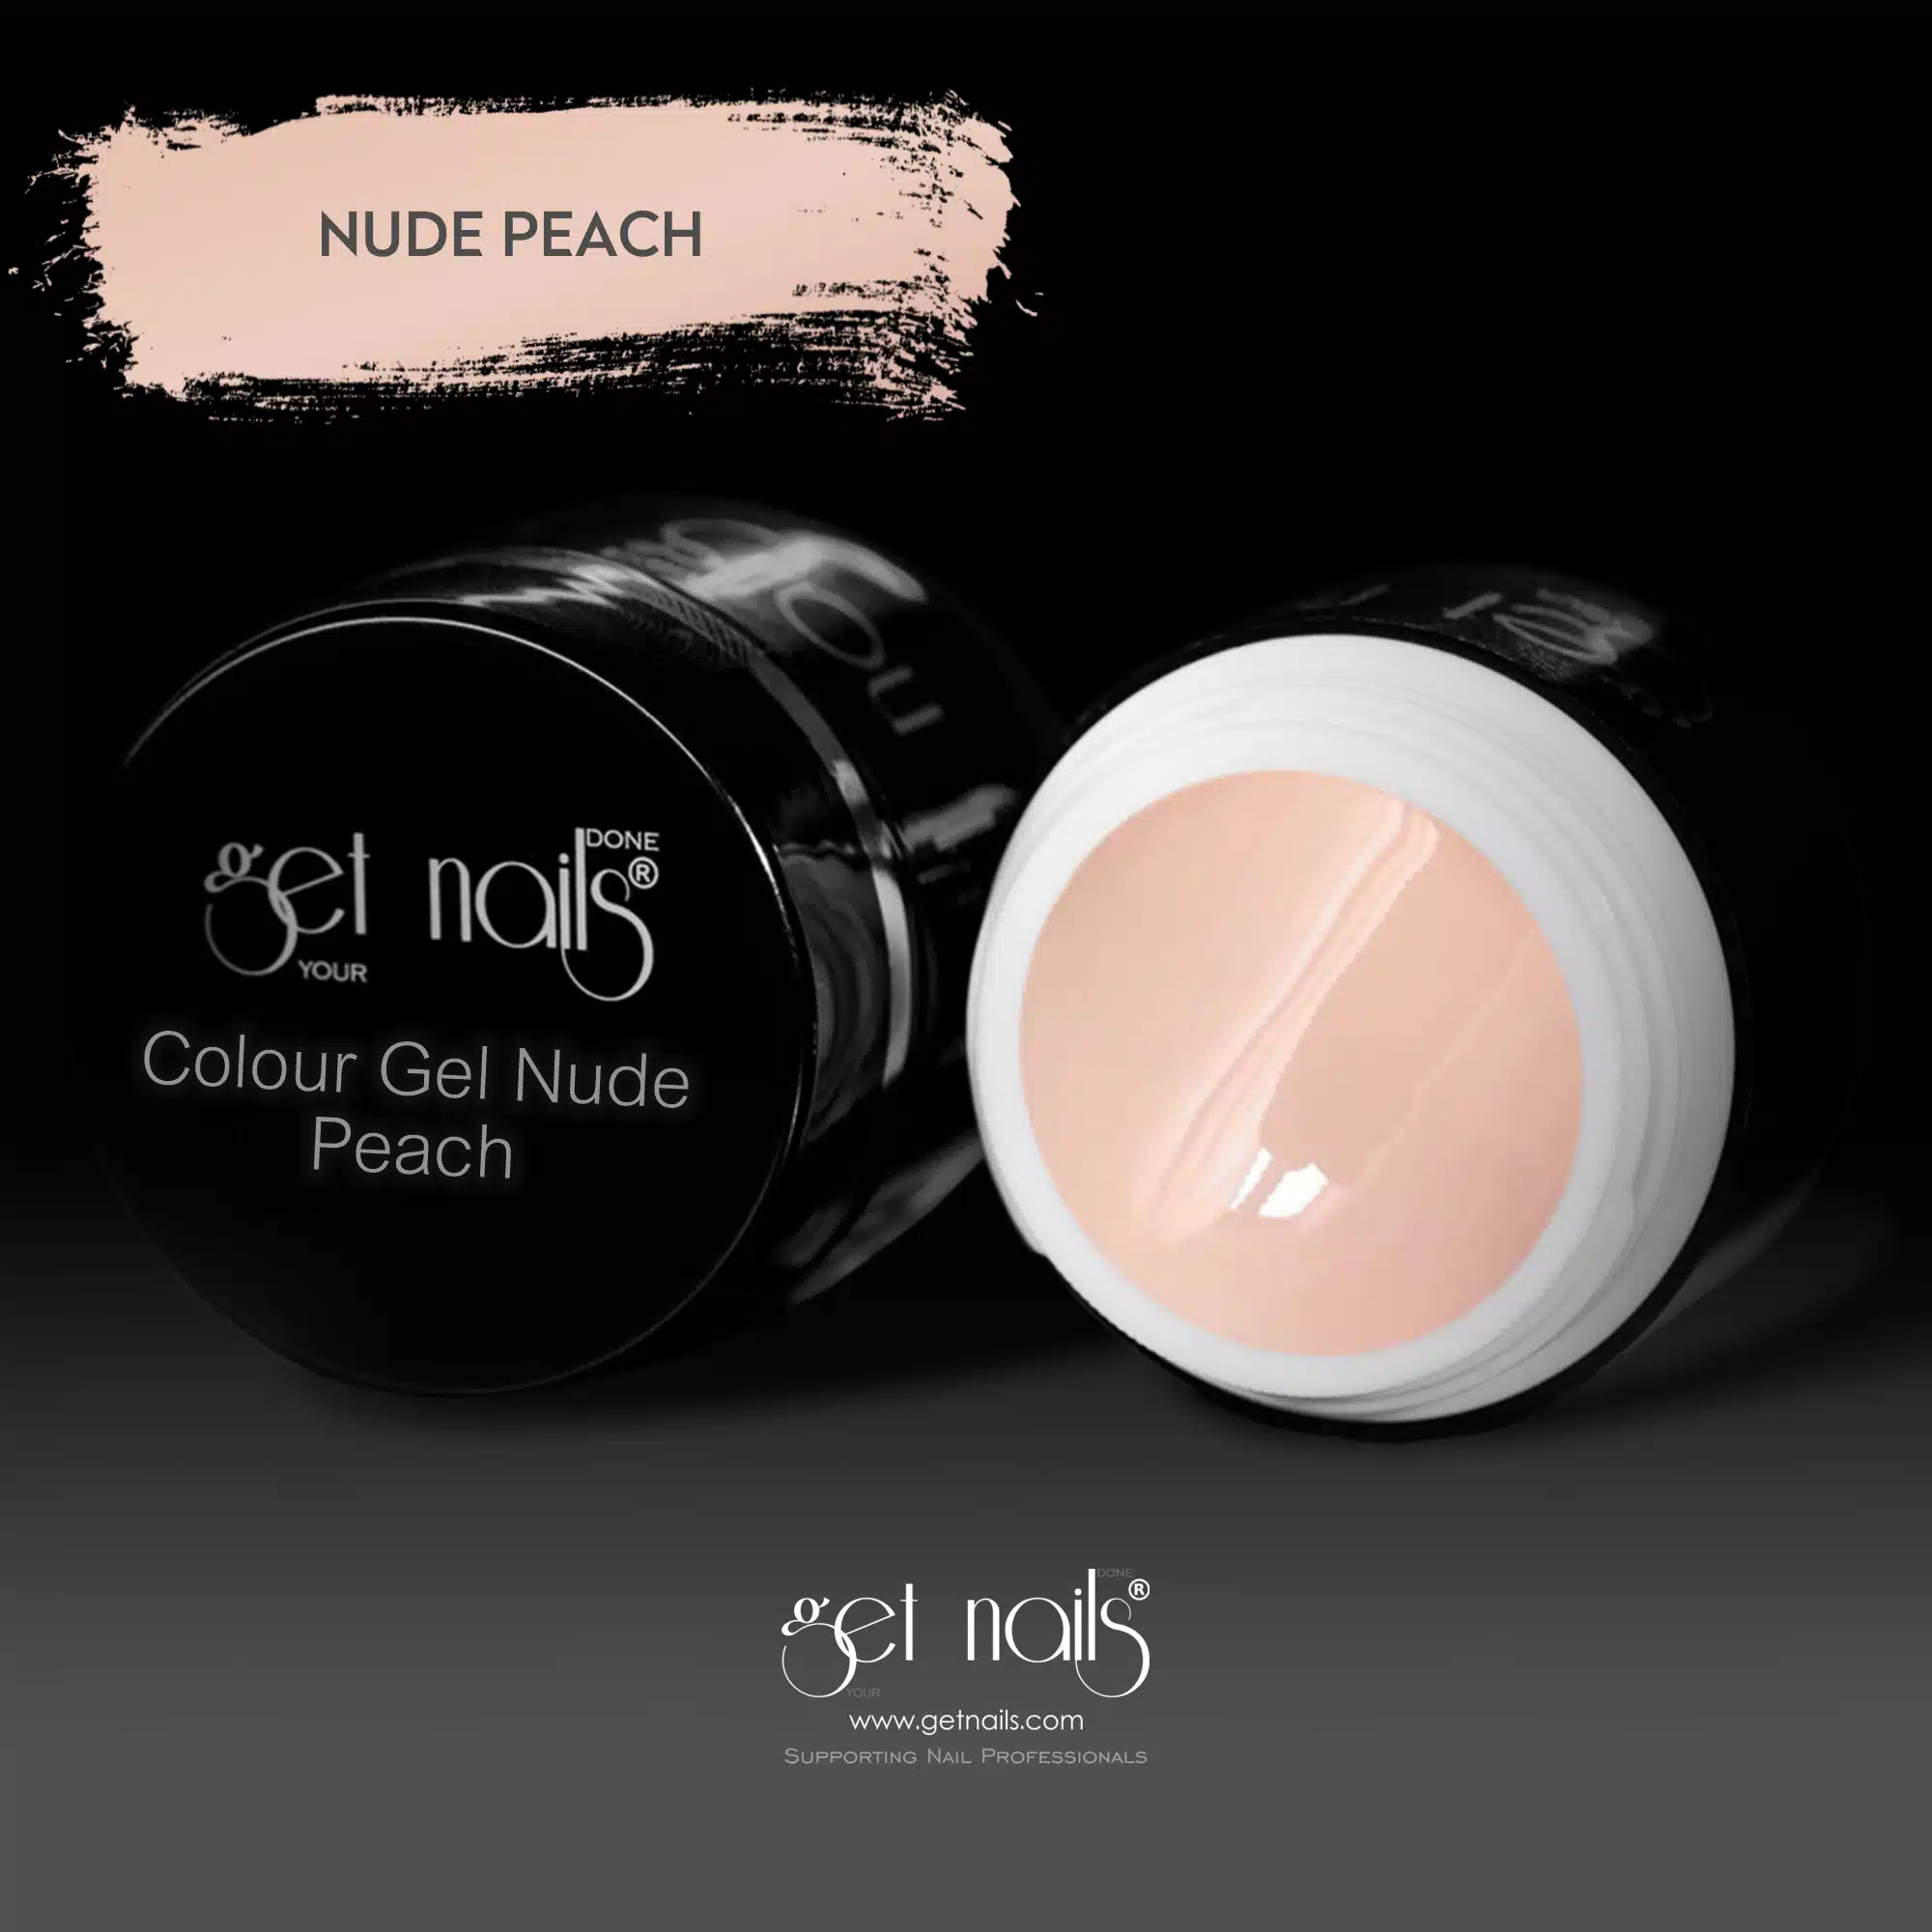 Get Nails Austria - Цветной гель Nude Peach 5g